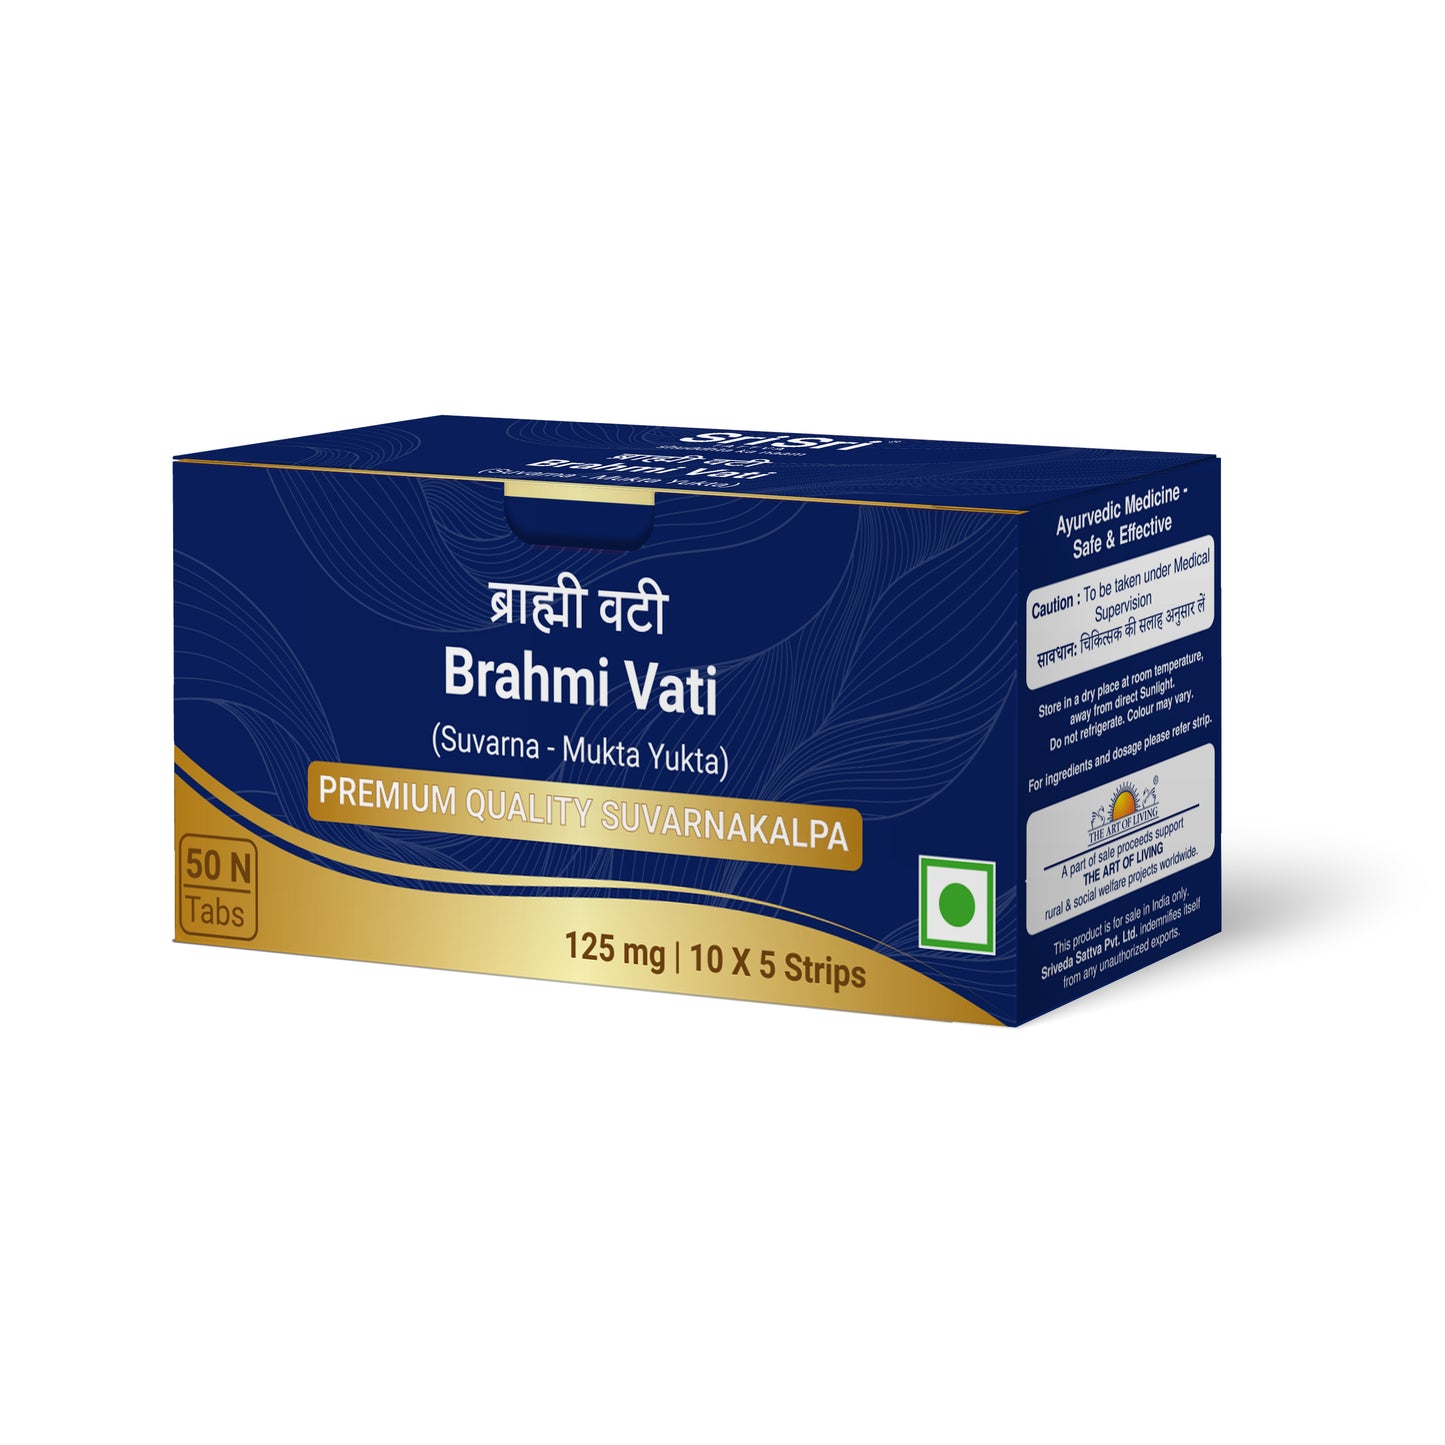 Brahmi Vati (Suvarna - Mukta Yukta) Suvarnayukta, 50 Tabs | 125 mg